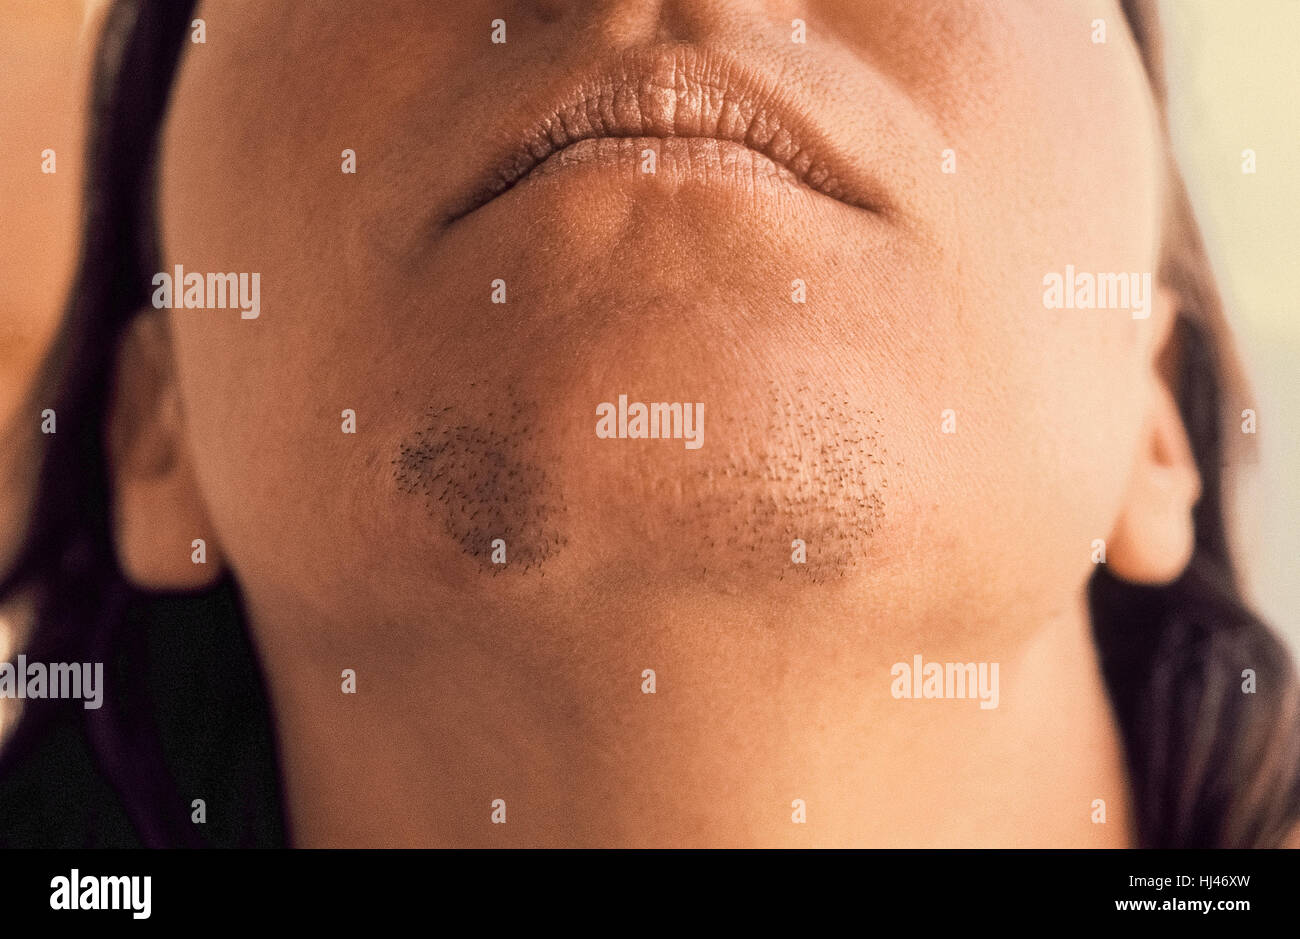 Facial hairs -Fotos und -Bildmaterial in hoher Auflösung – Alamy